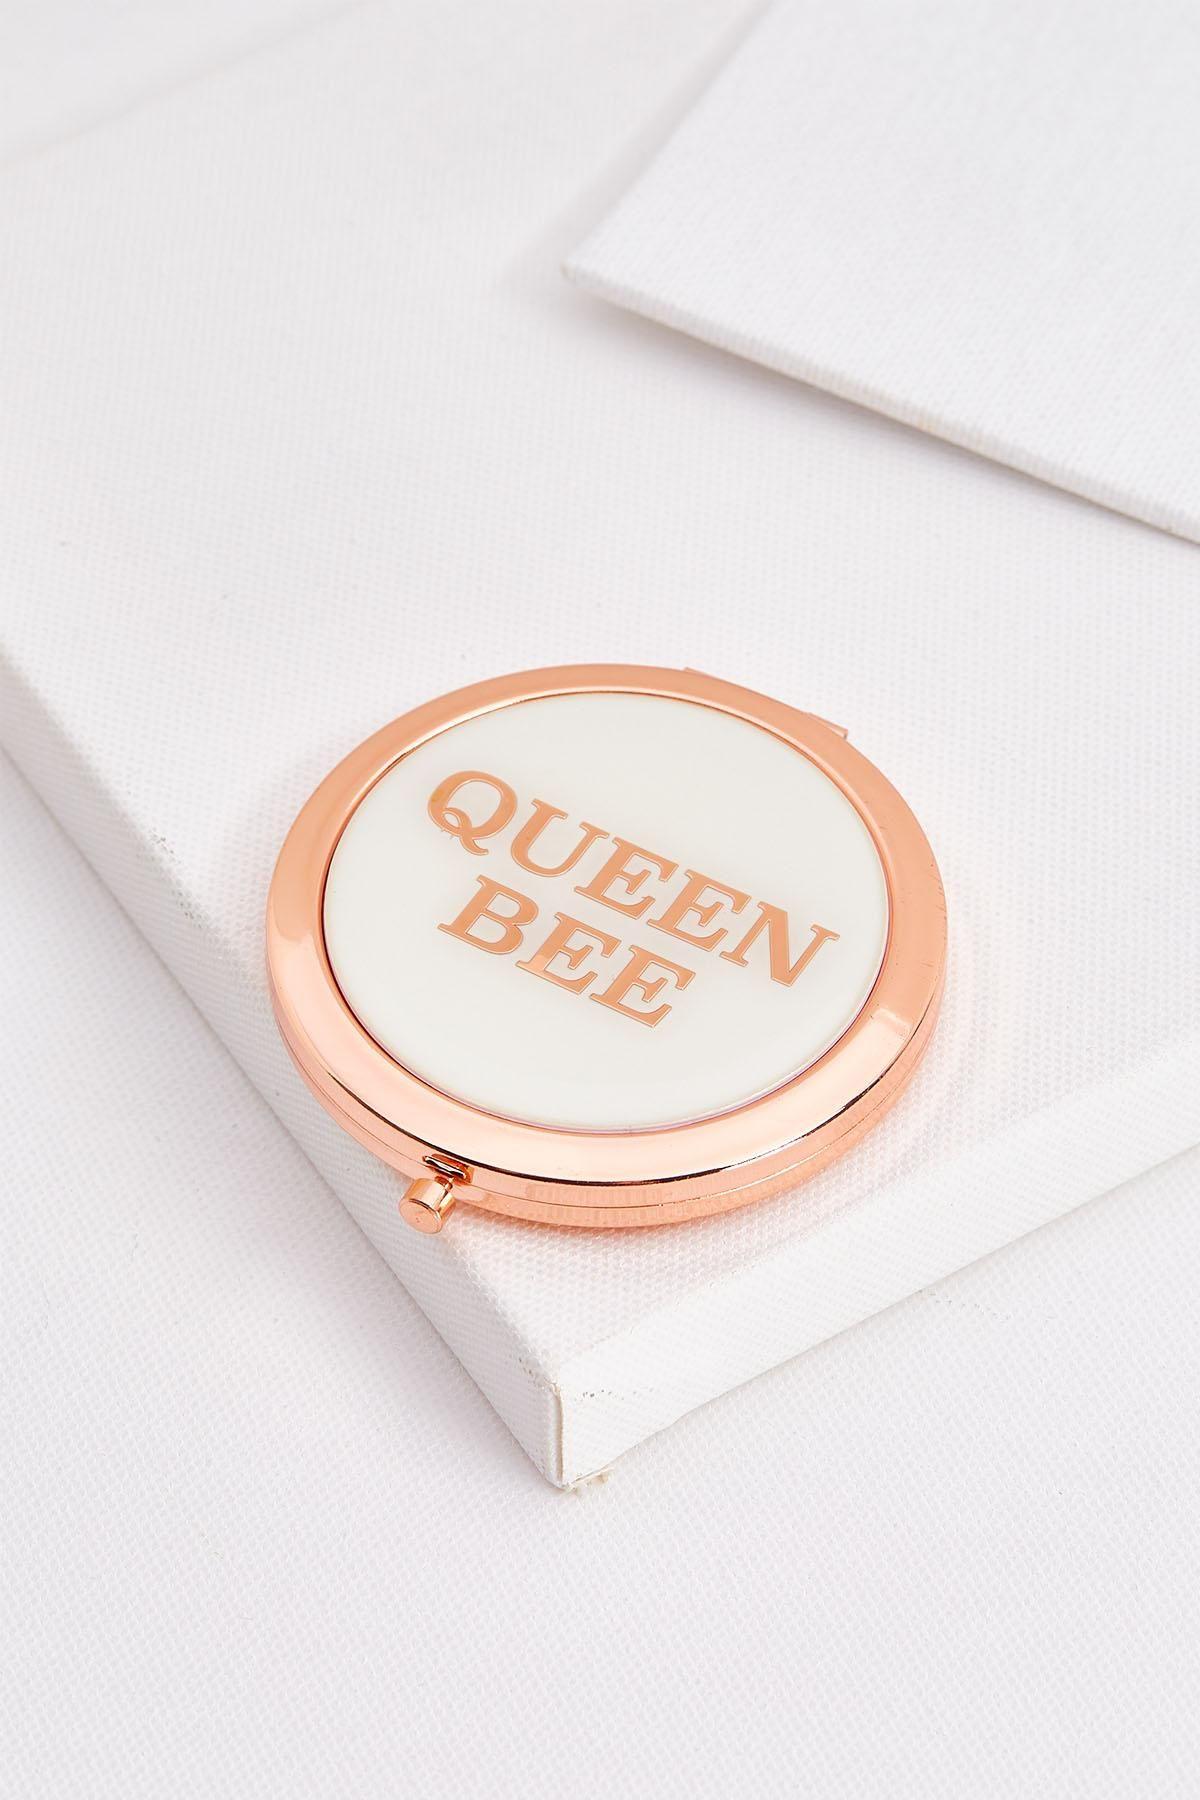 Versona Logo - Versona | queen bee compact mirror